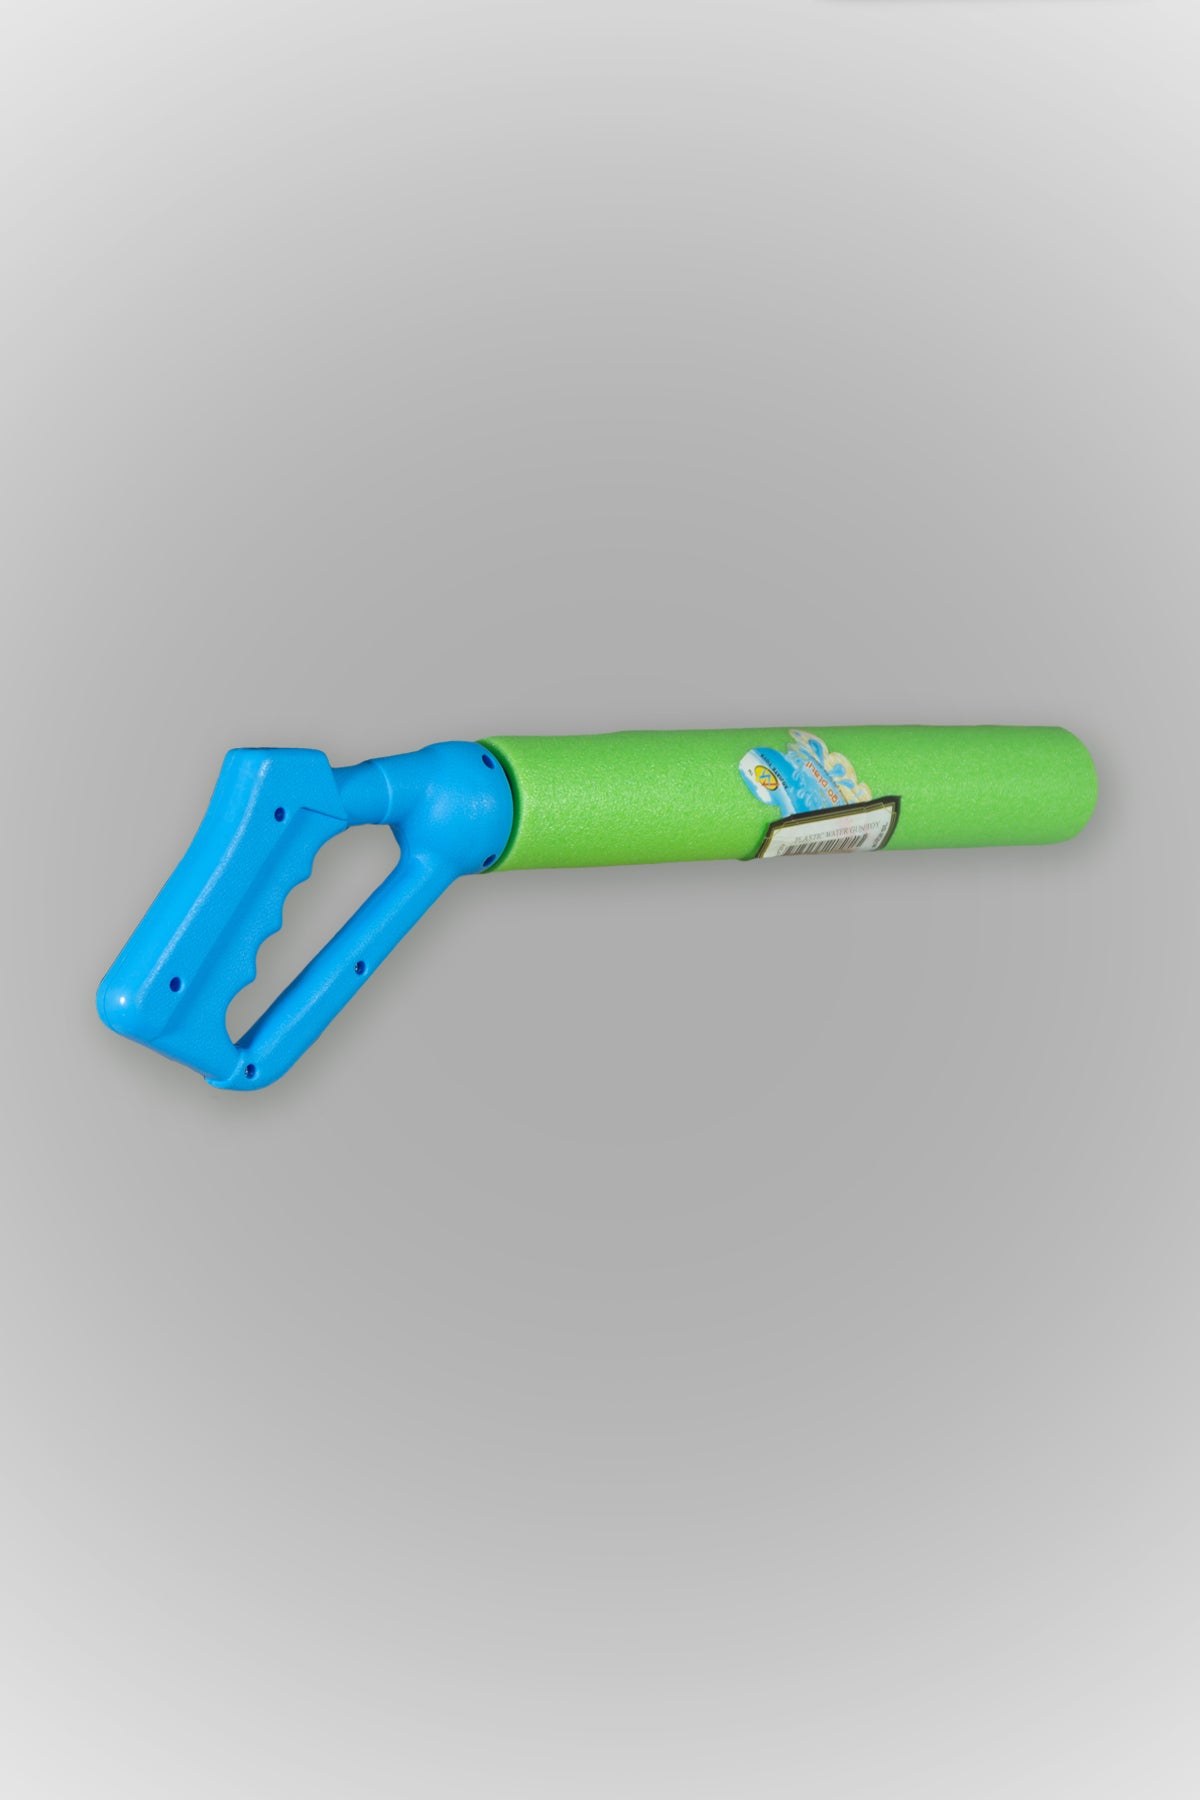 Plastic Water Gun Toy